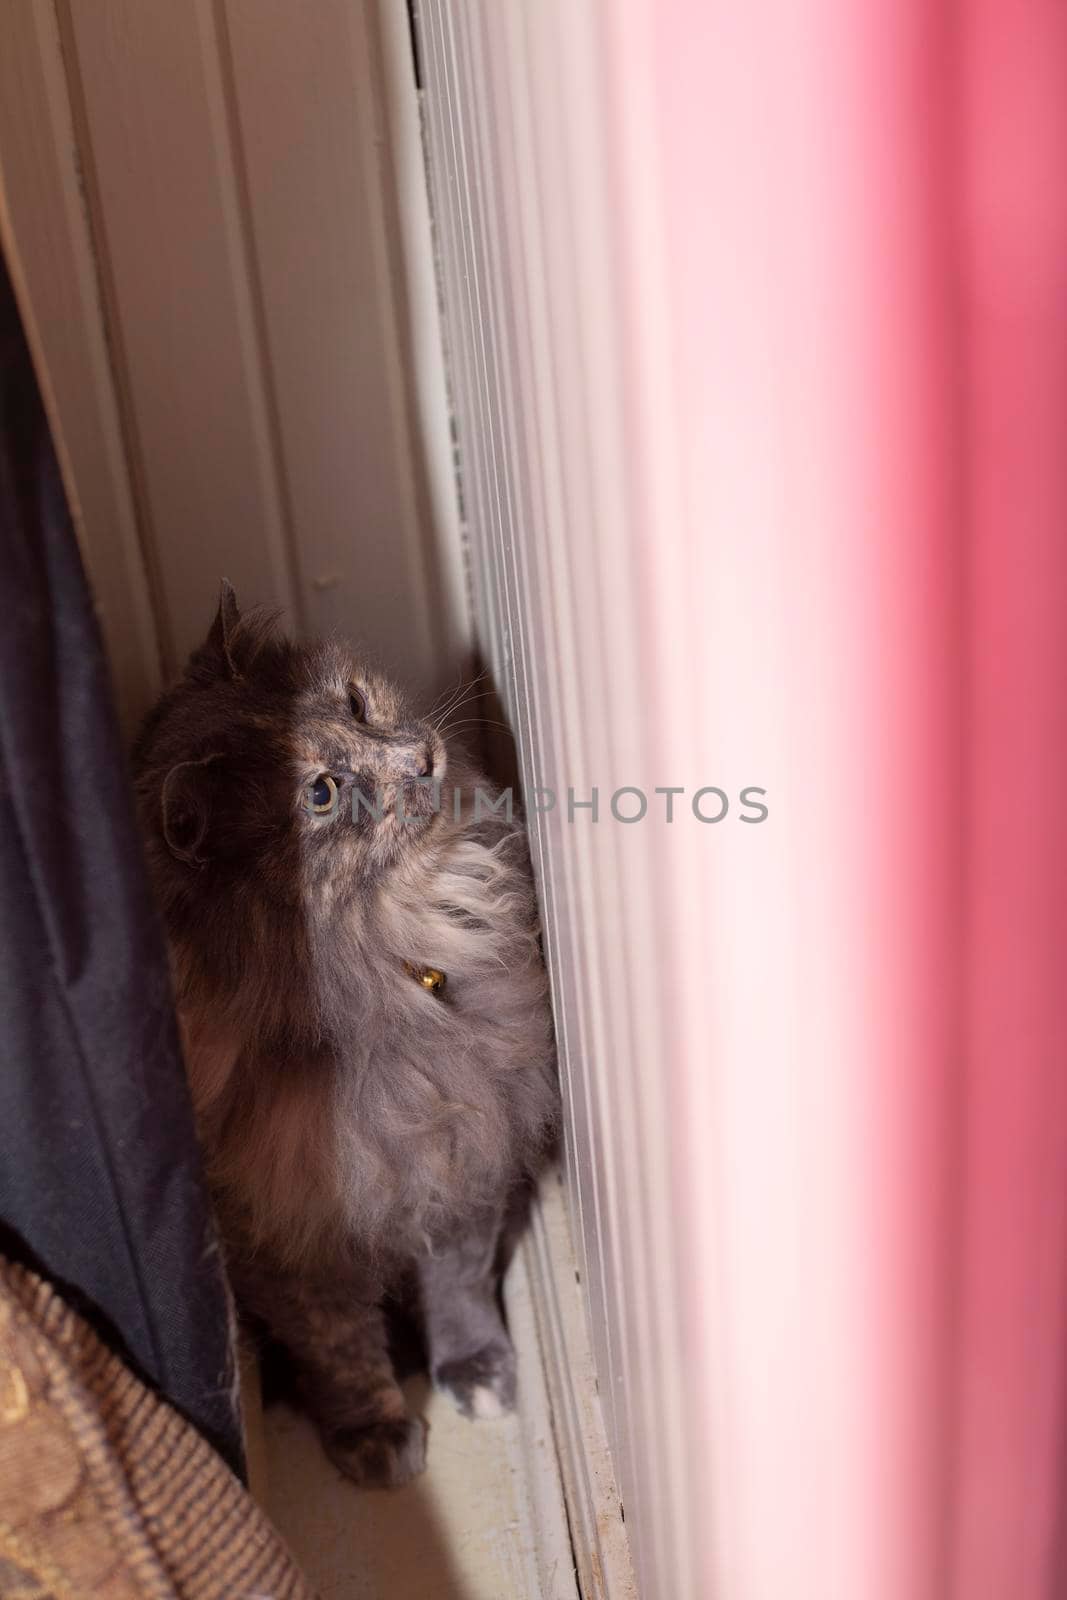 Calm, longhair grey cat hiding in a closet